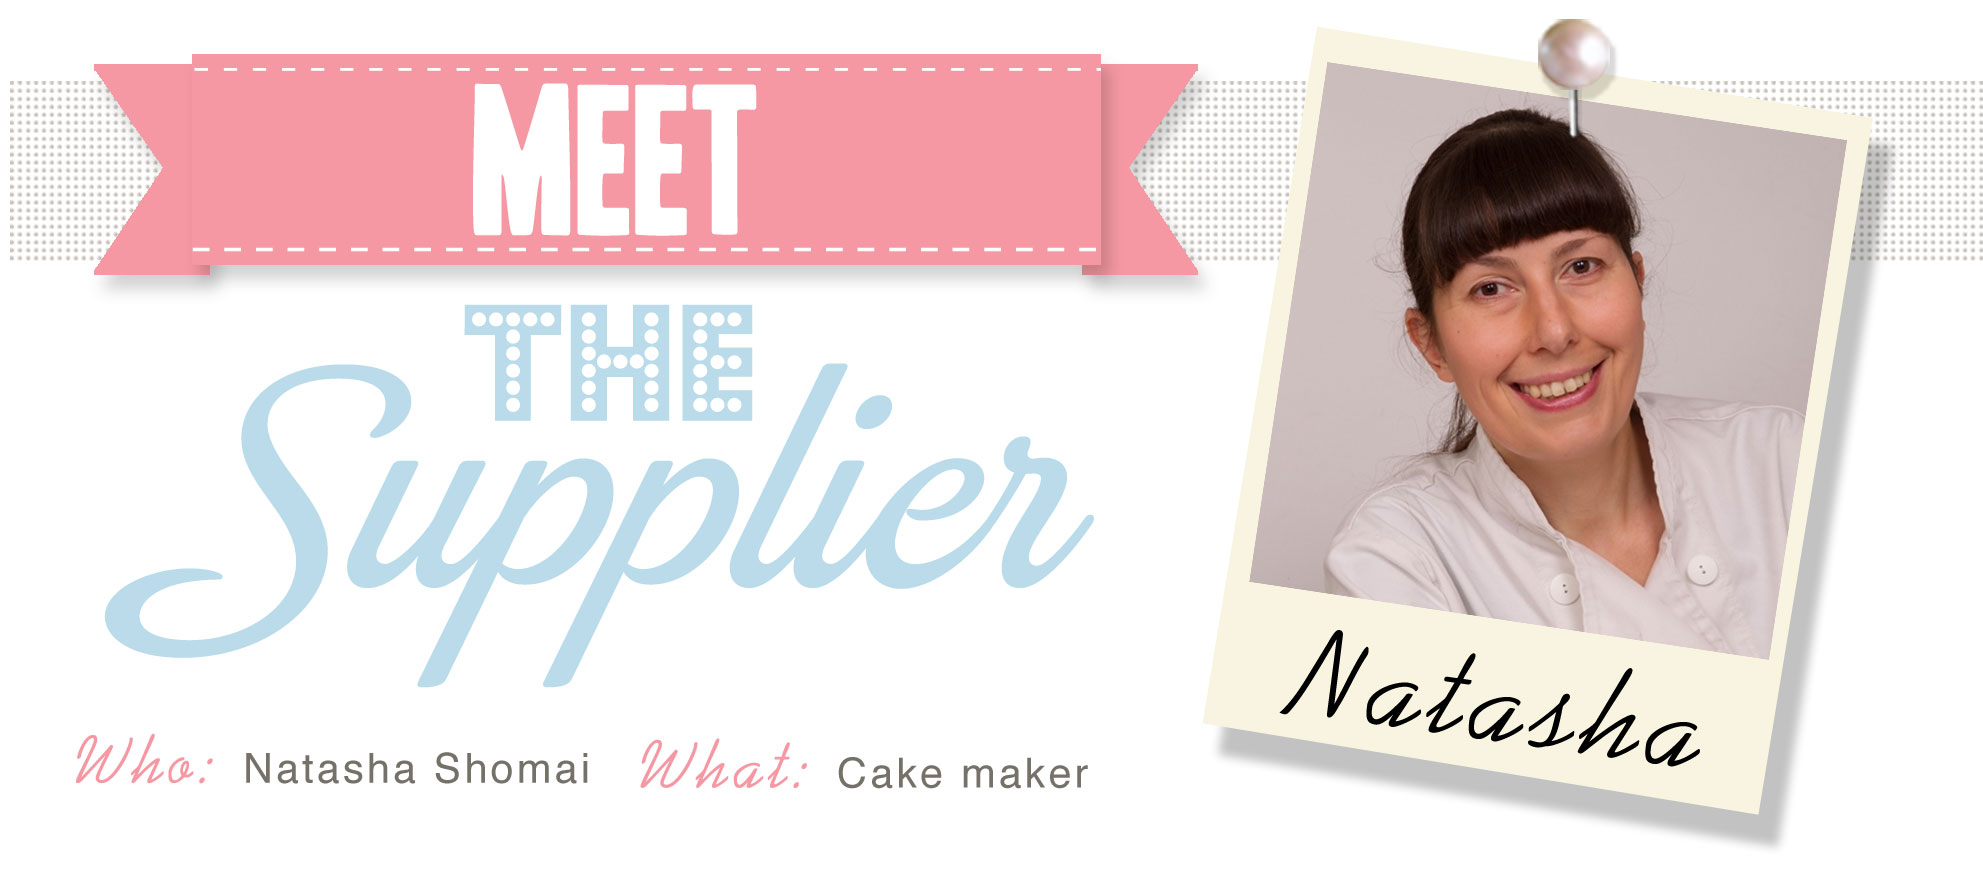 Meet-the-Supplier-Blog-Post_Natasha